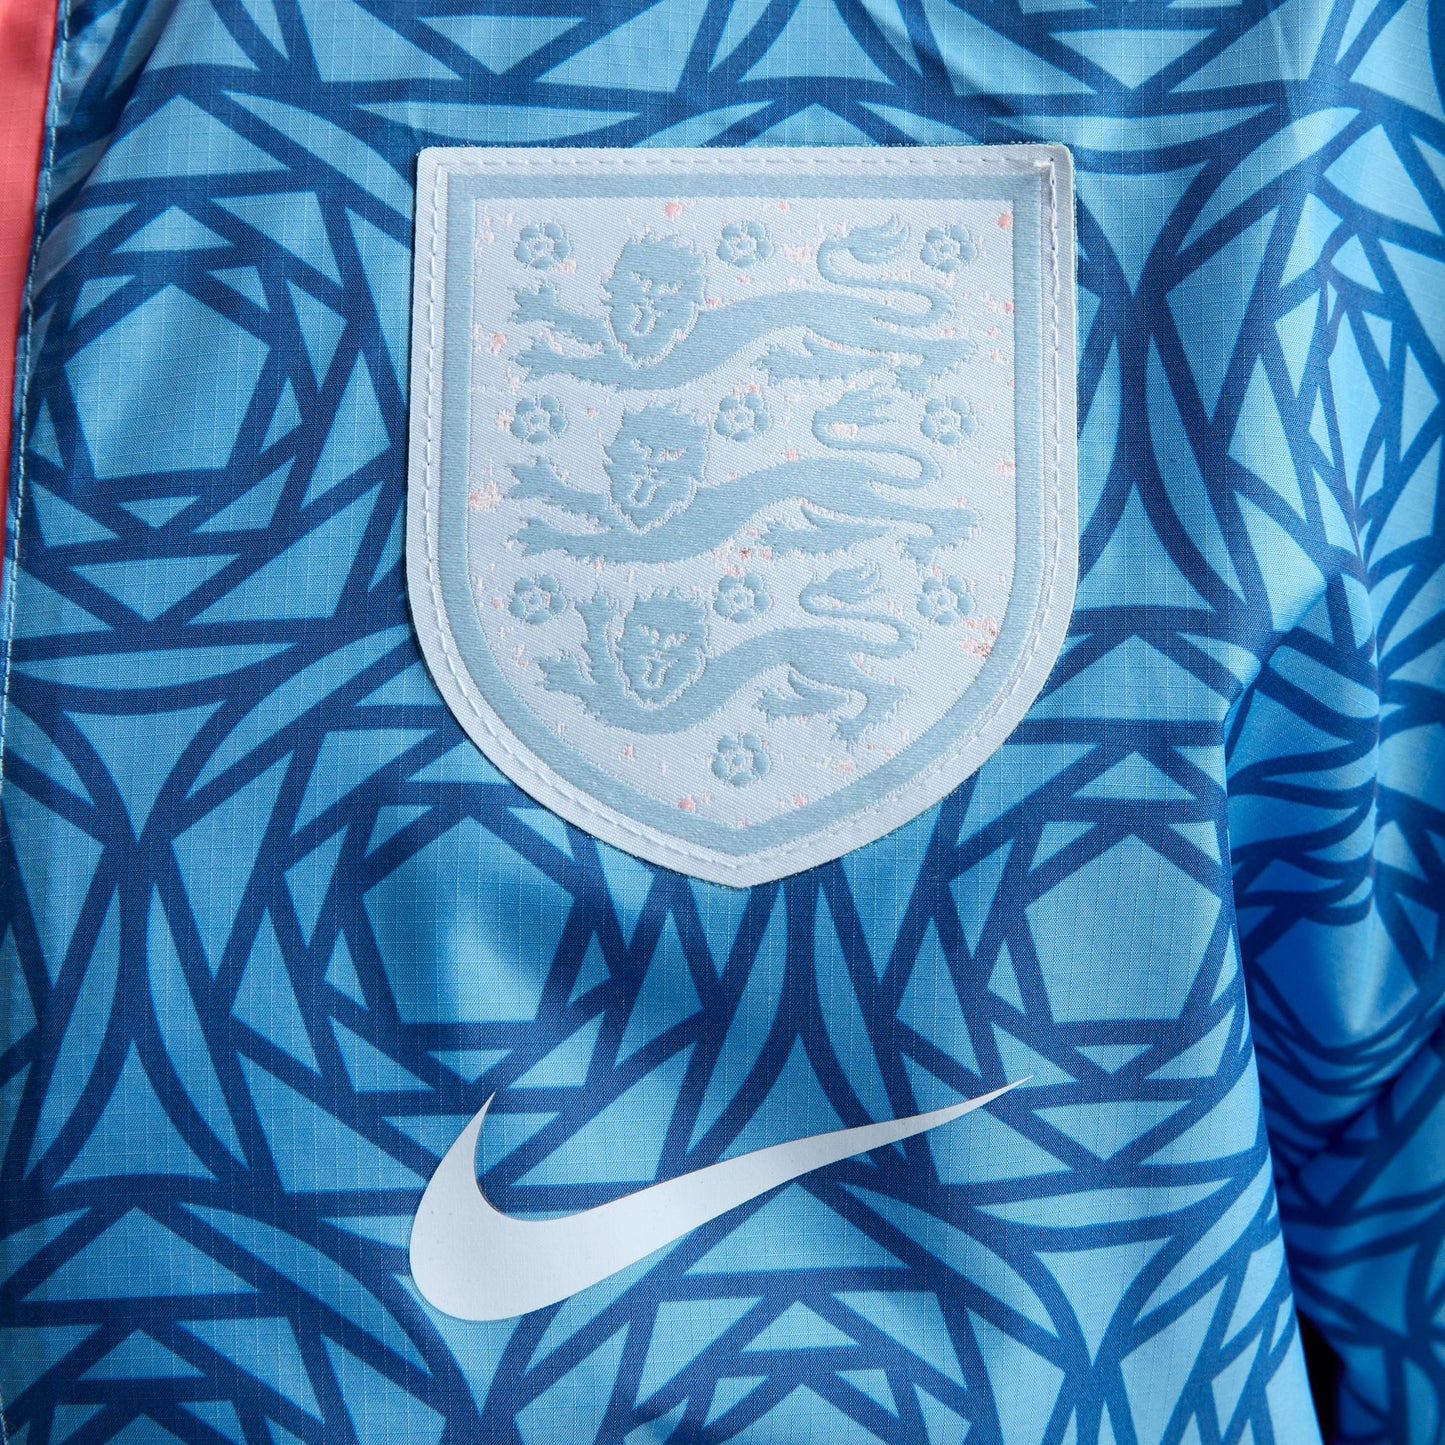 England Essential Women's Nike Jacket